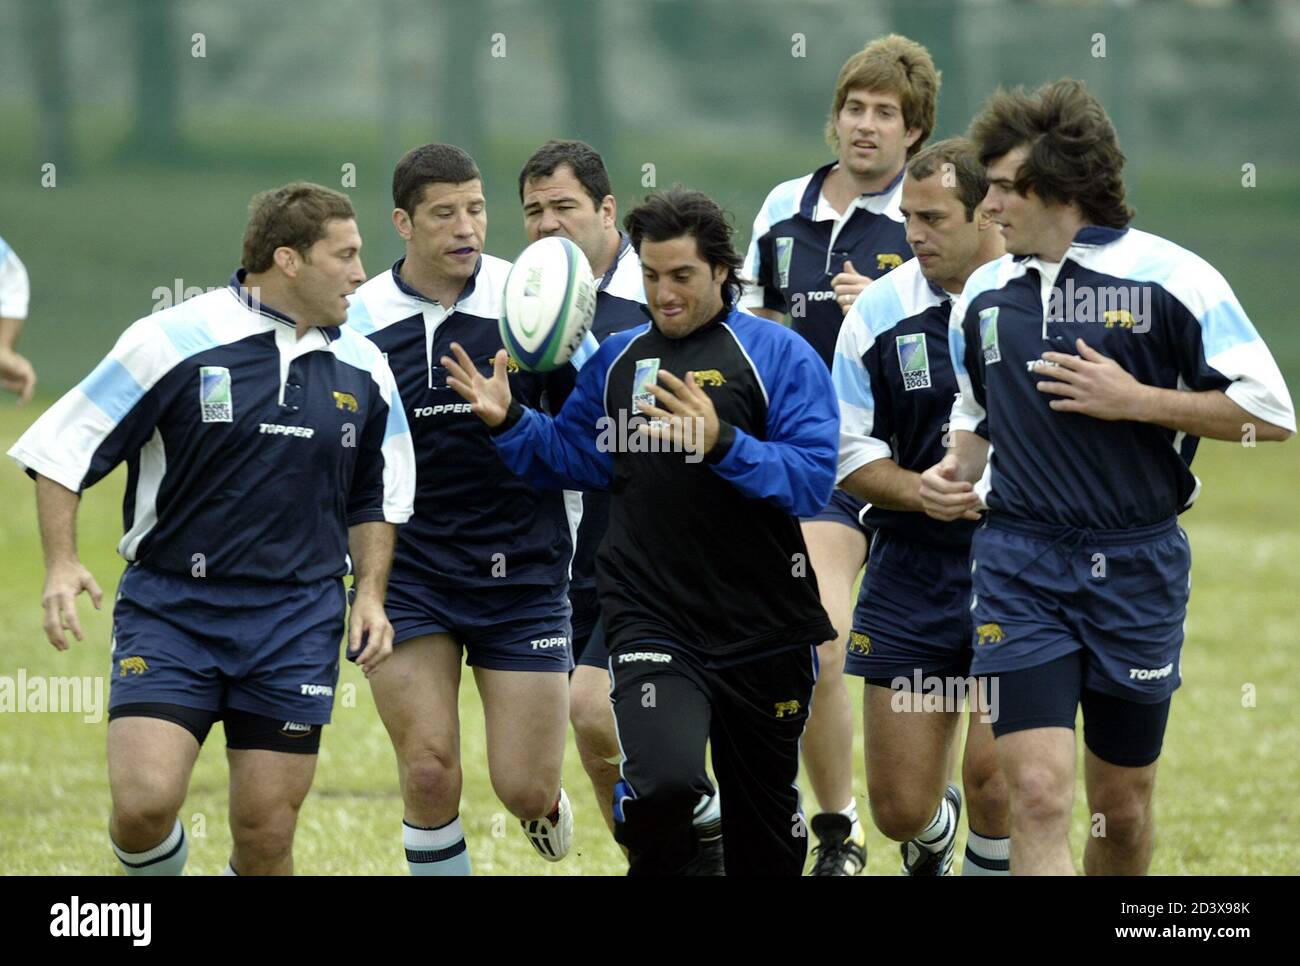 Rugby players of Argentina's side Los Pumas (L-R) Roberto Grau, Manuel  Contemponi, Federico Mendez, Agustin Pichot, Ignacio Lobbe, Gonzalo Longo  and Pablo Bauza, train ahead of the World Cup at the Randwick